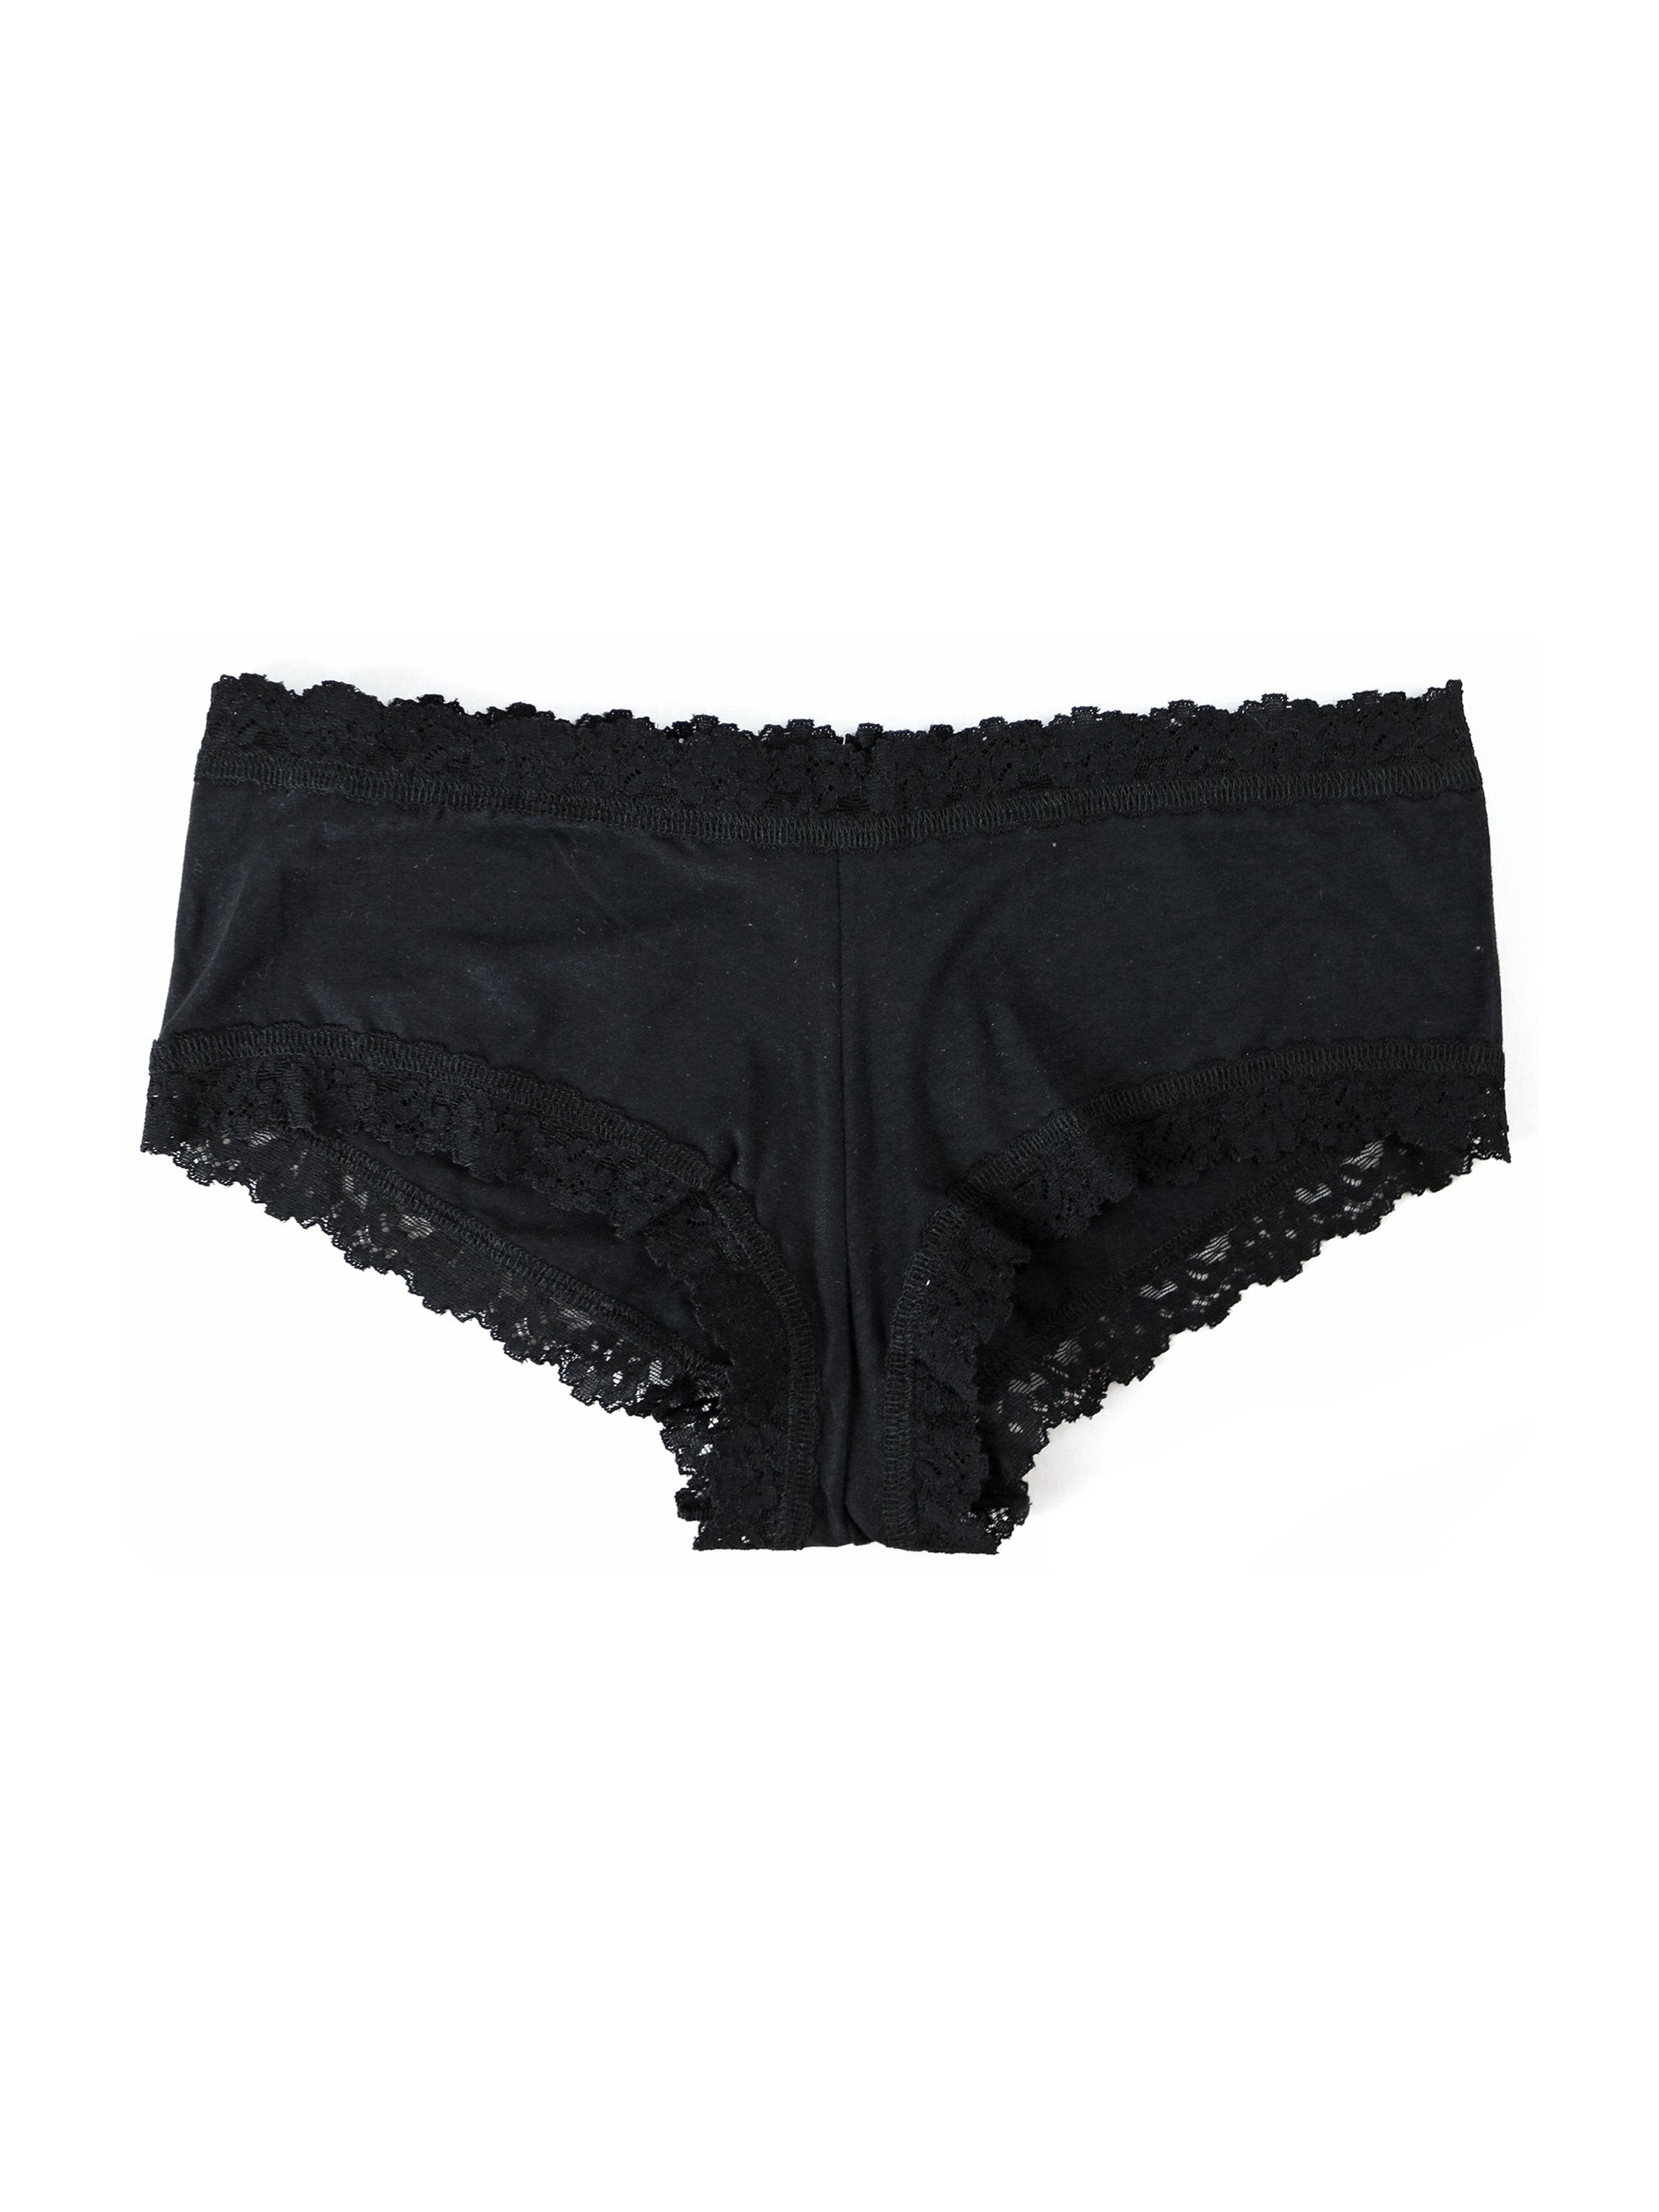 Hanes Women's Panties Pack, Seamless Smoothing High-Waist Briefs,  High-Waisted Brief Underwear, 3-Pack (Colors May Vary), Black/Black/Black,  Large price in Saudi Arabia,  Saudi Arabia